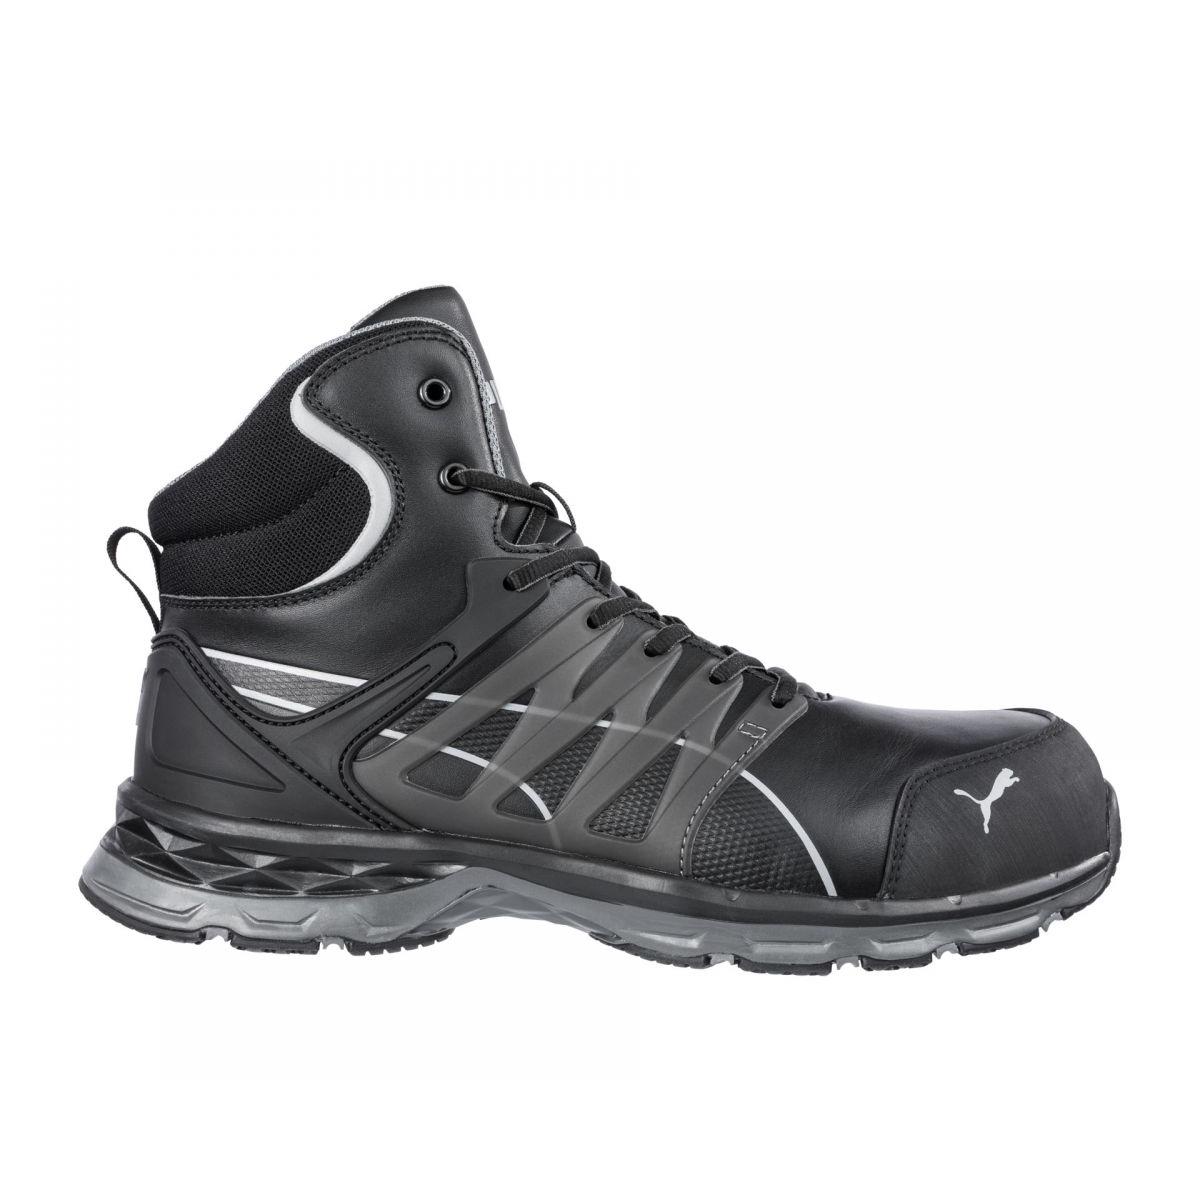 PUMA Safety Men's Velocity 2.0 Mid Composite Toe ESD Work Boot Black - 633805 ONE SIZE BLACK - BLACK, 12